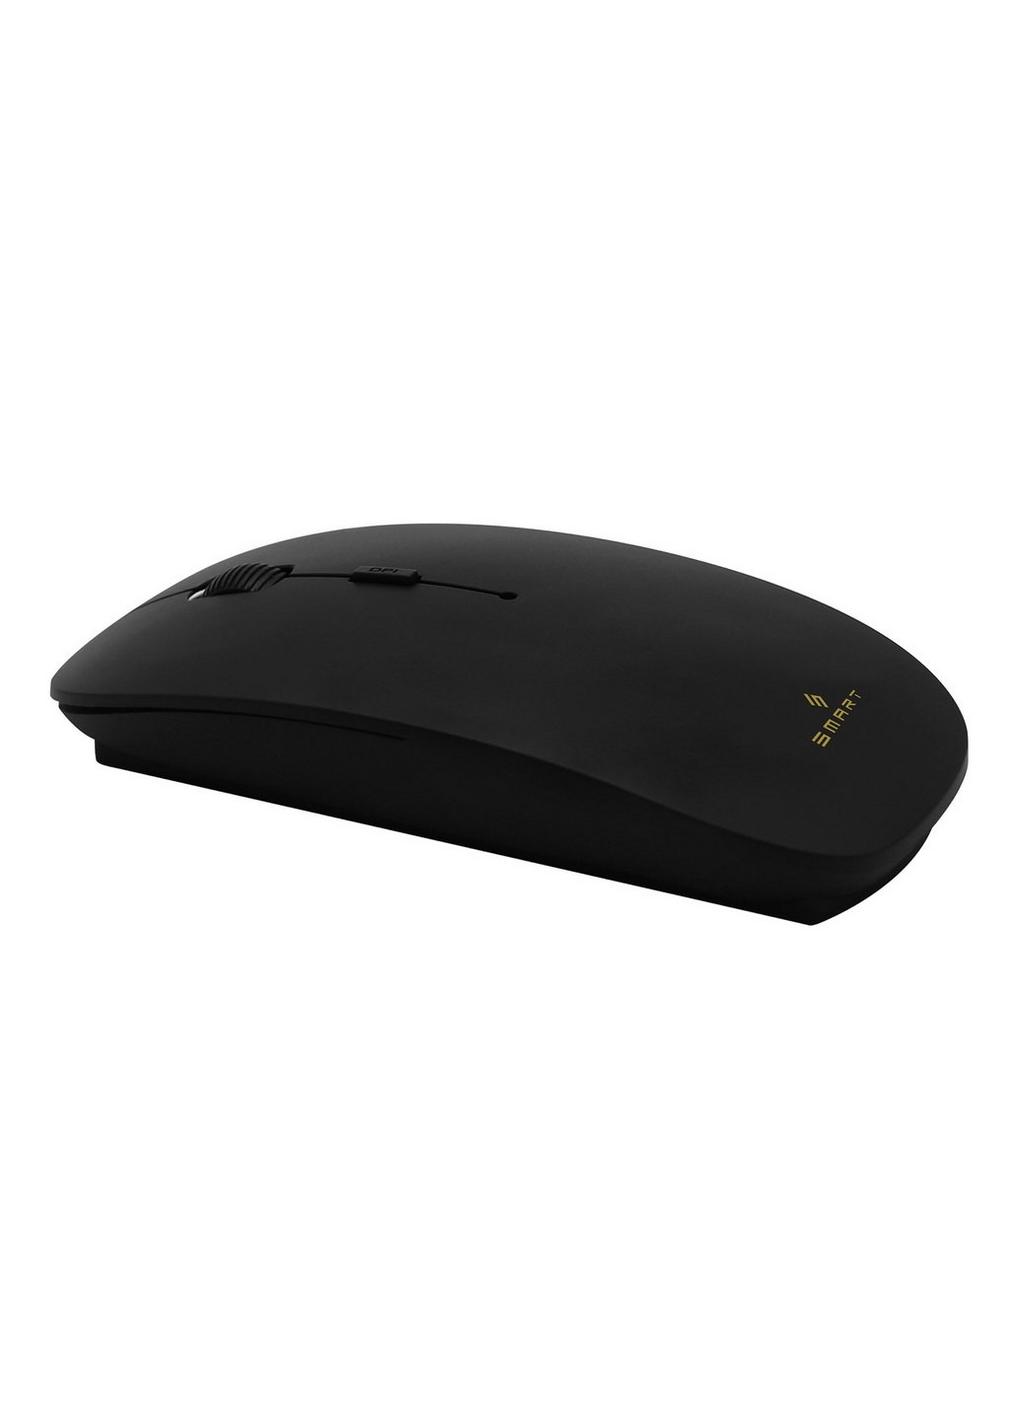 Smart Premium Wireless Mouse | Color Black | Computer Accessories in Bahrain | Halabh